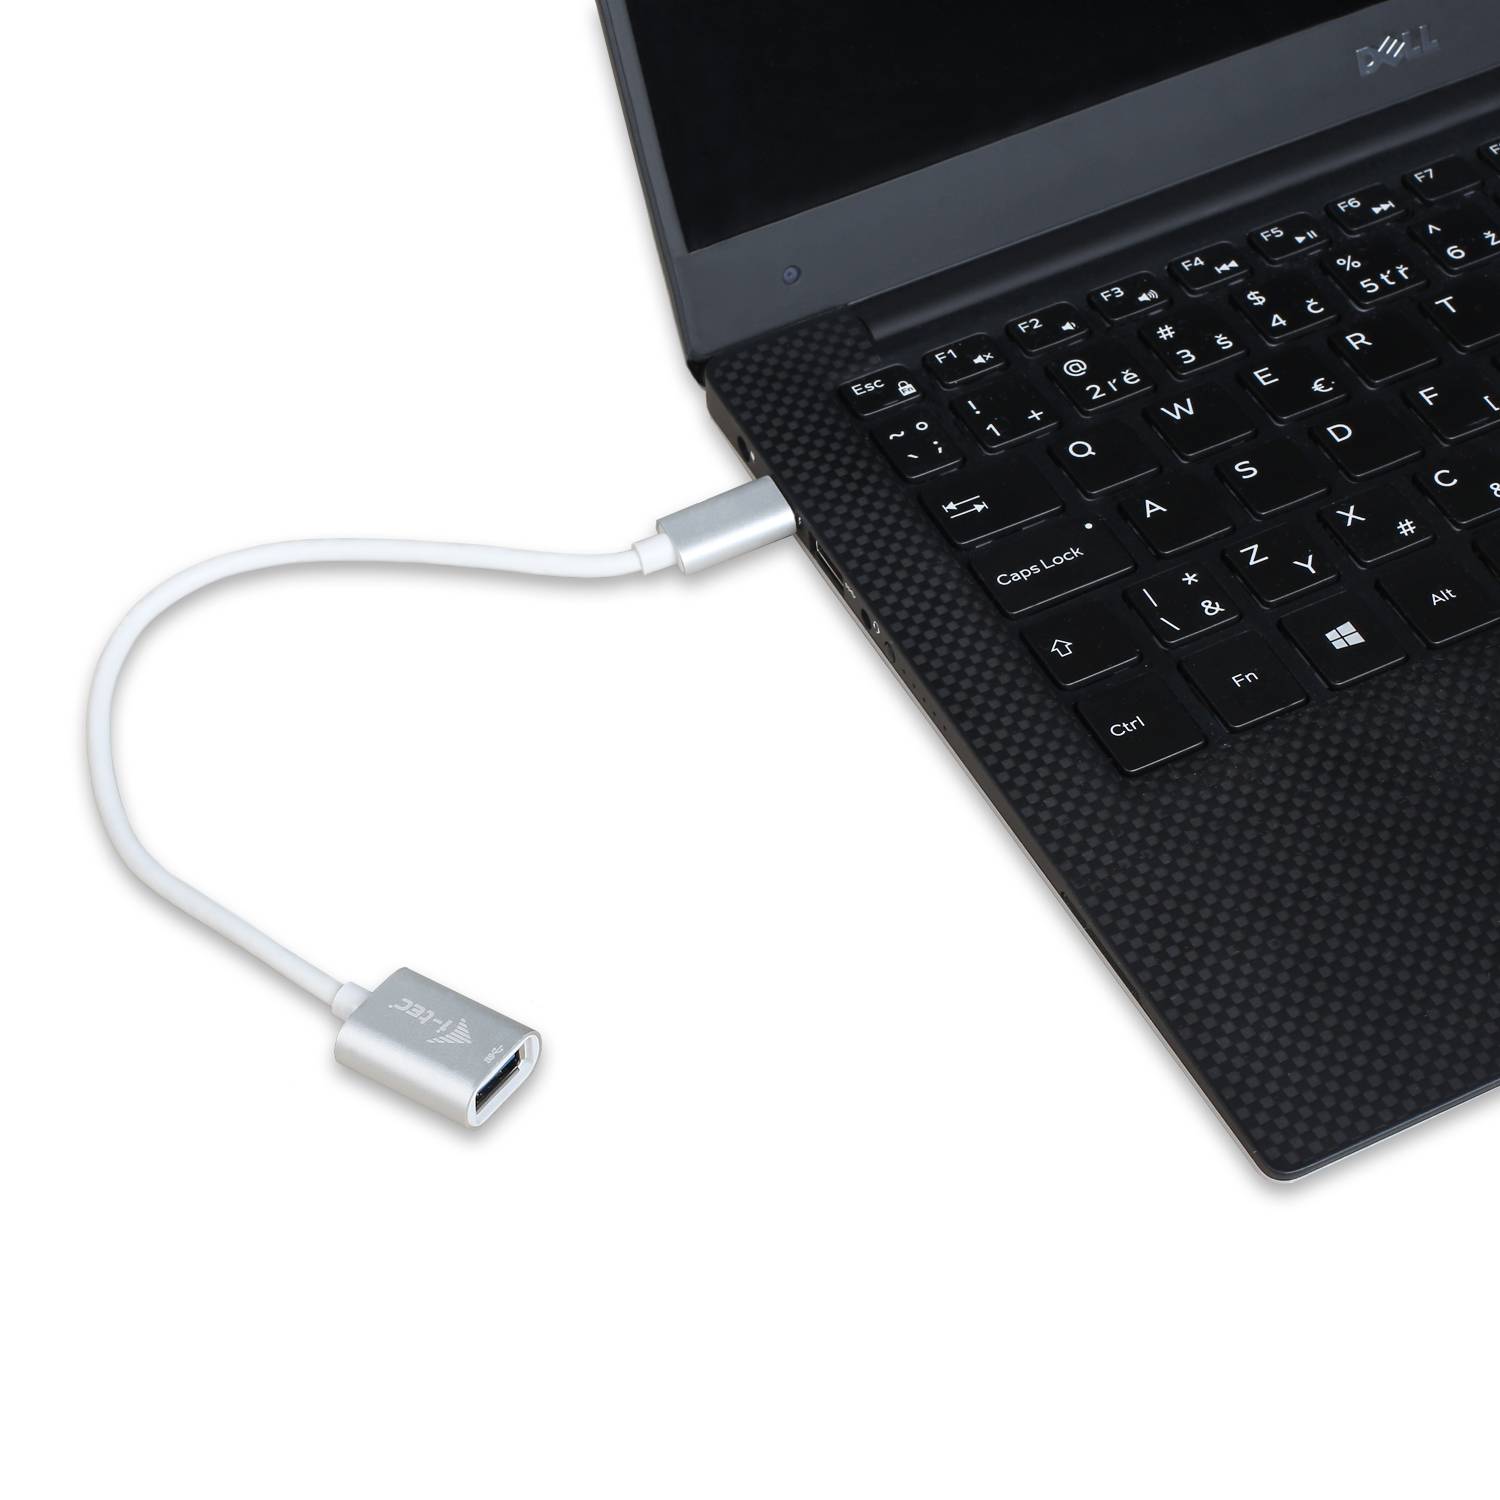 Rca Informatique - image du produit : I-TEC USB ADAPTER TYPEC/TYPEA USB 3.1 TO USB TYP-C